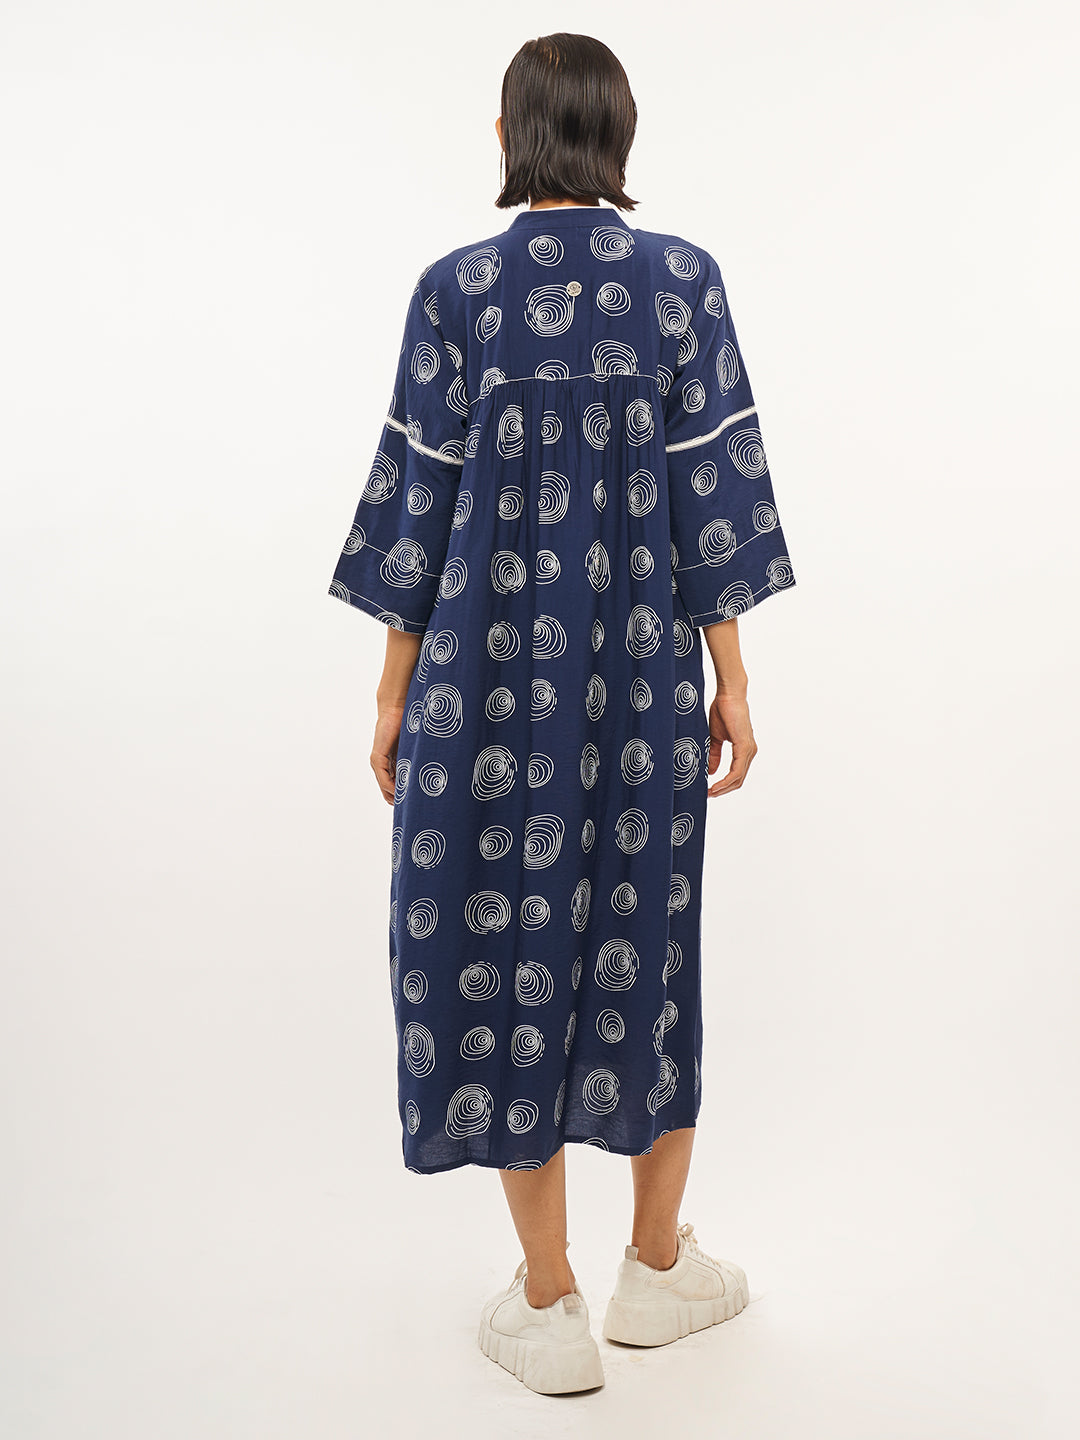 Blue Abstract Empire Dress - ARH362